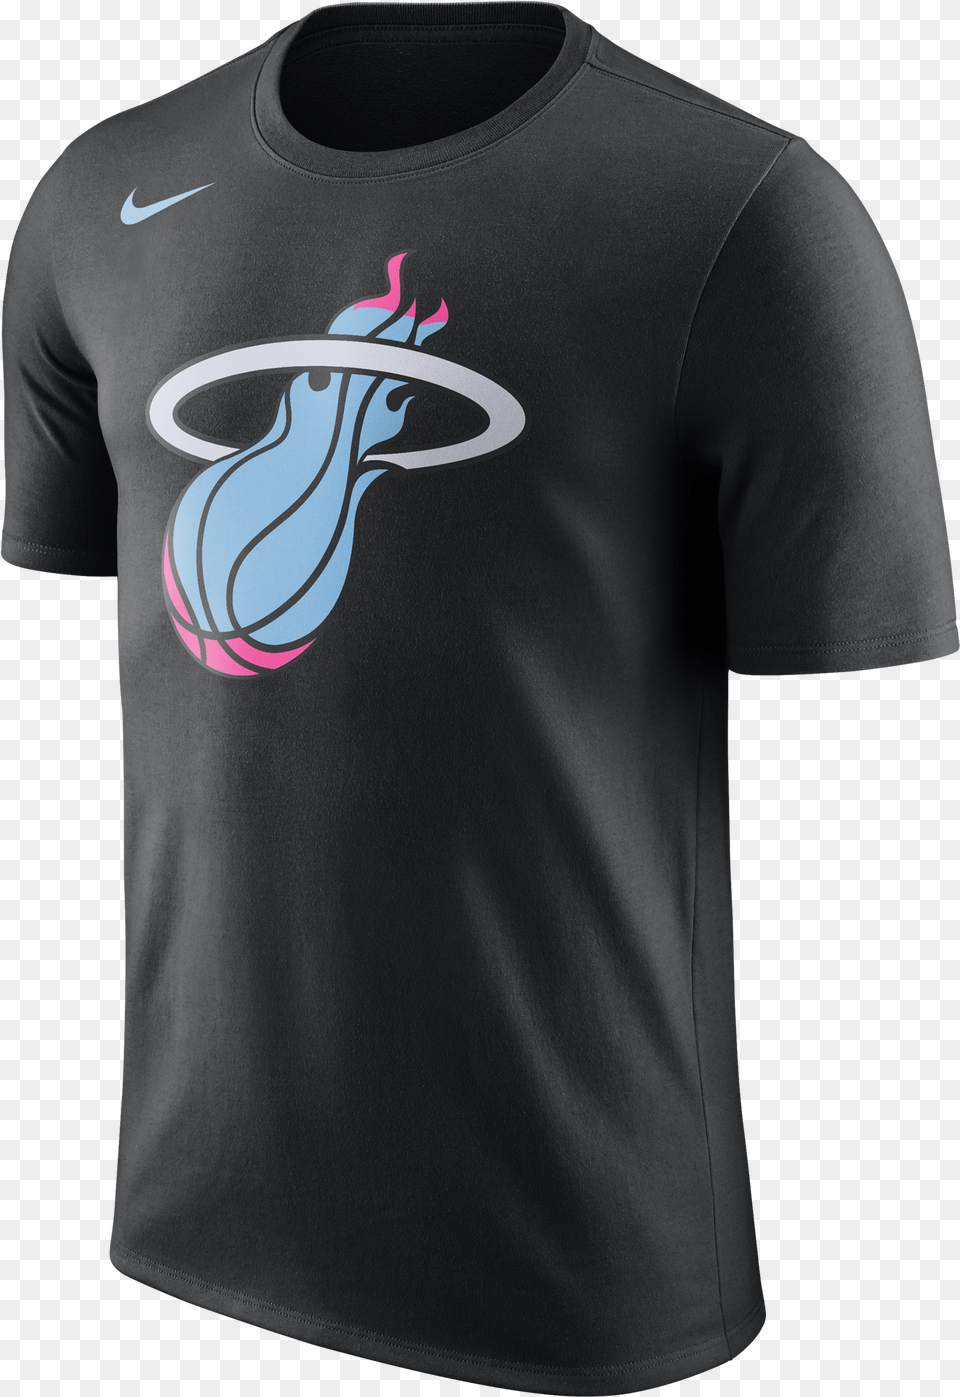 Miami Heat Vice Nike Shirt, Clothing, T-shirt Png